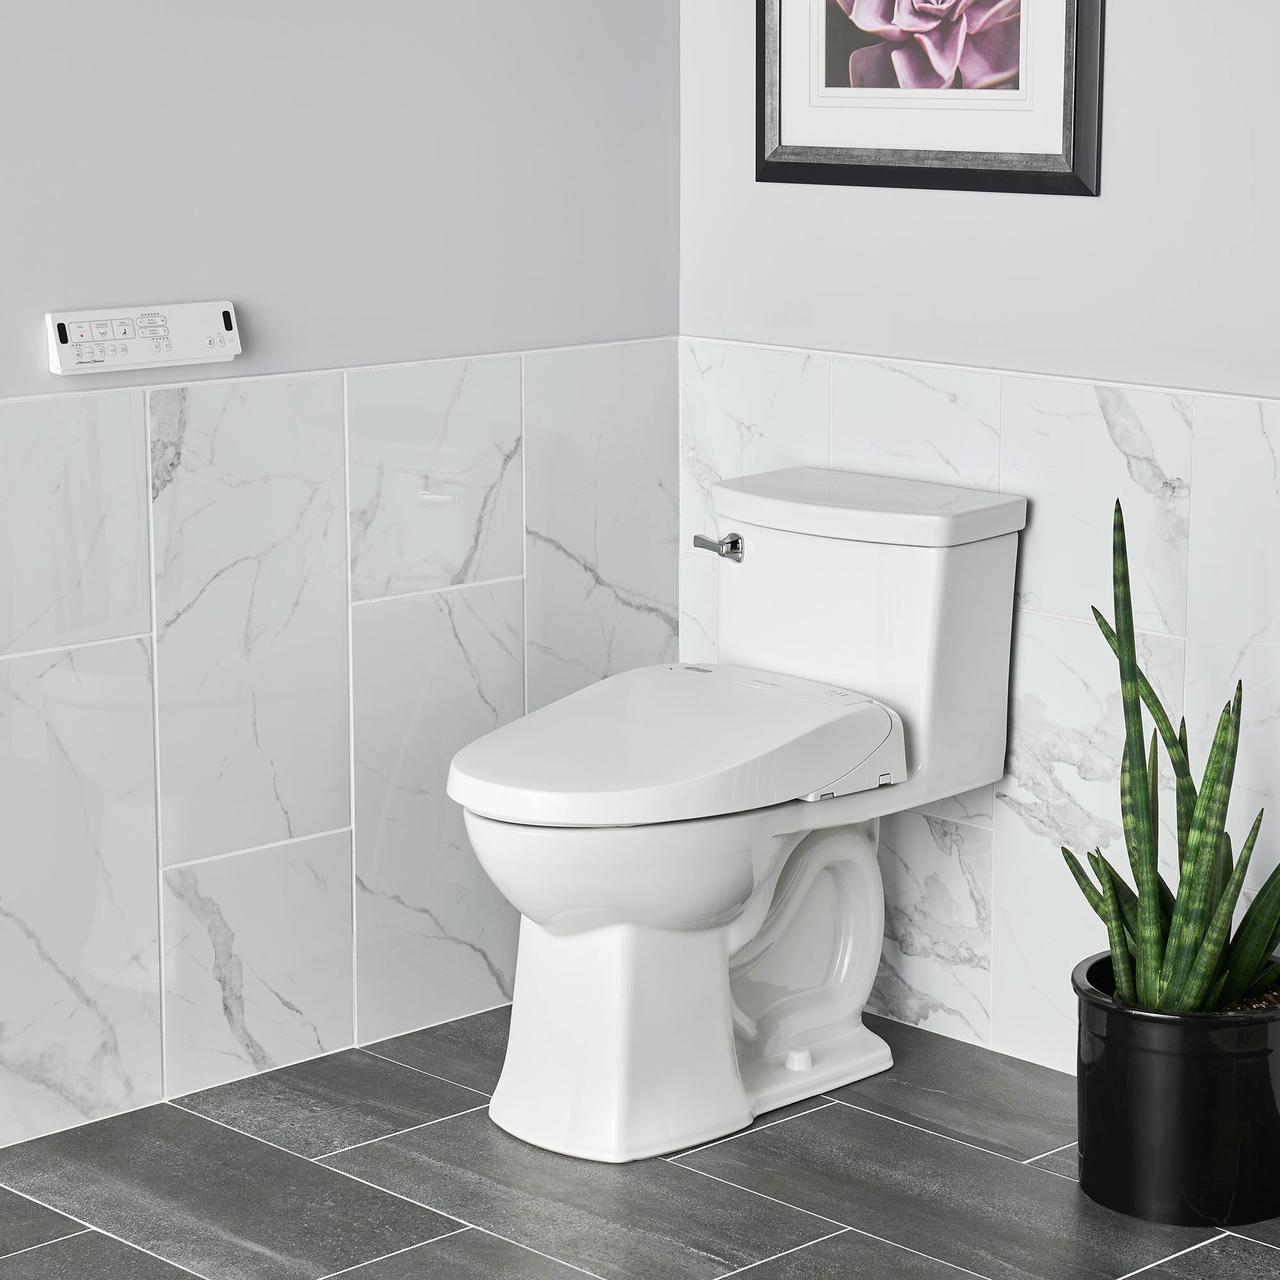 Toilet seat, Plumbing fixture, Interior design, Plant, White, Bathroom, Black, Purple, Flowerpot